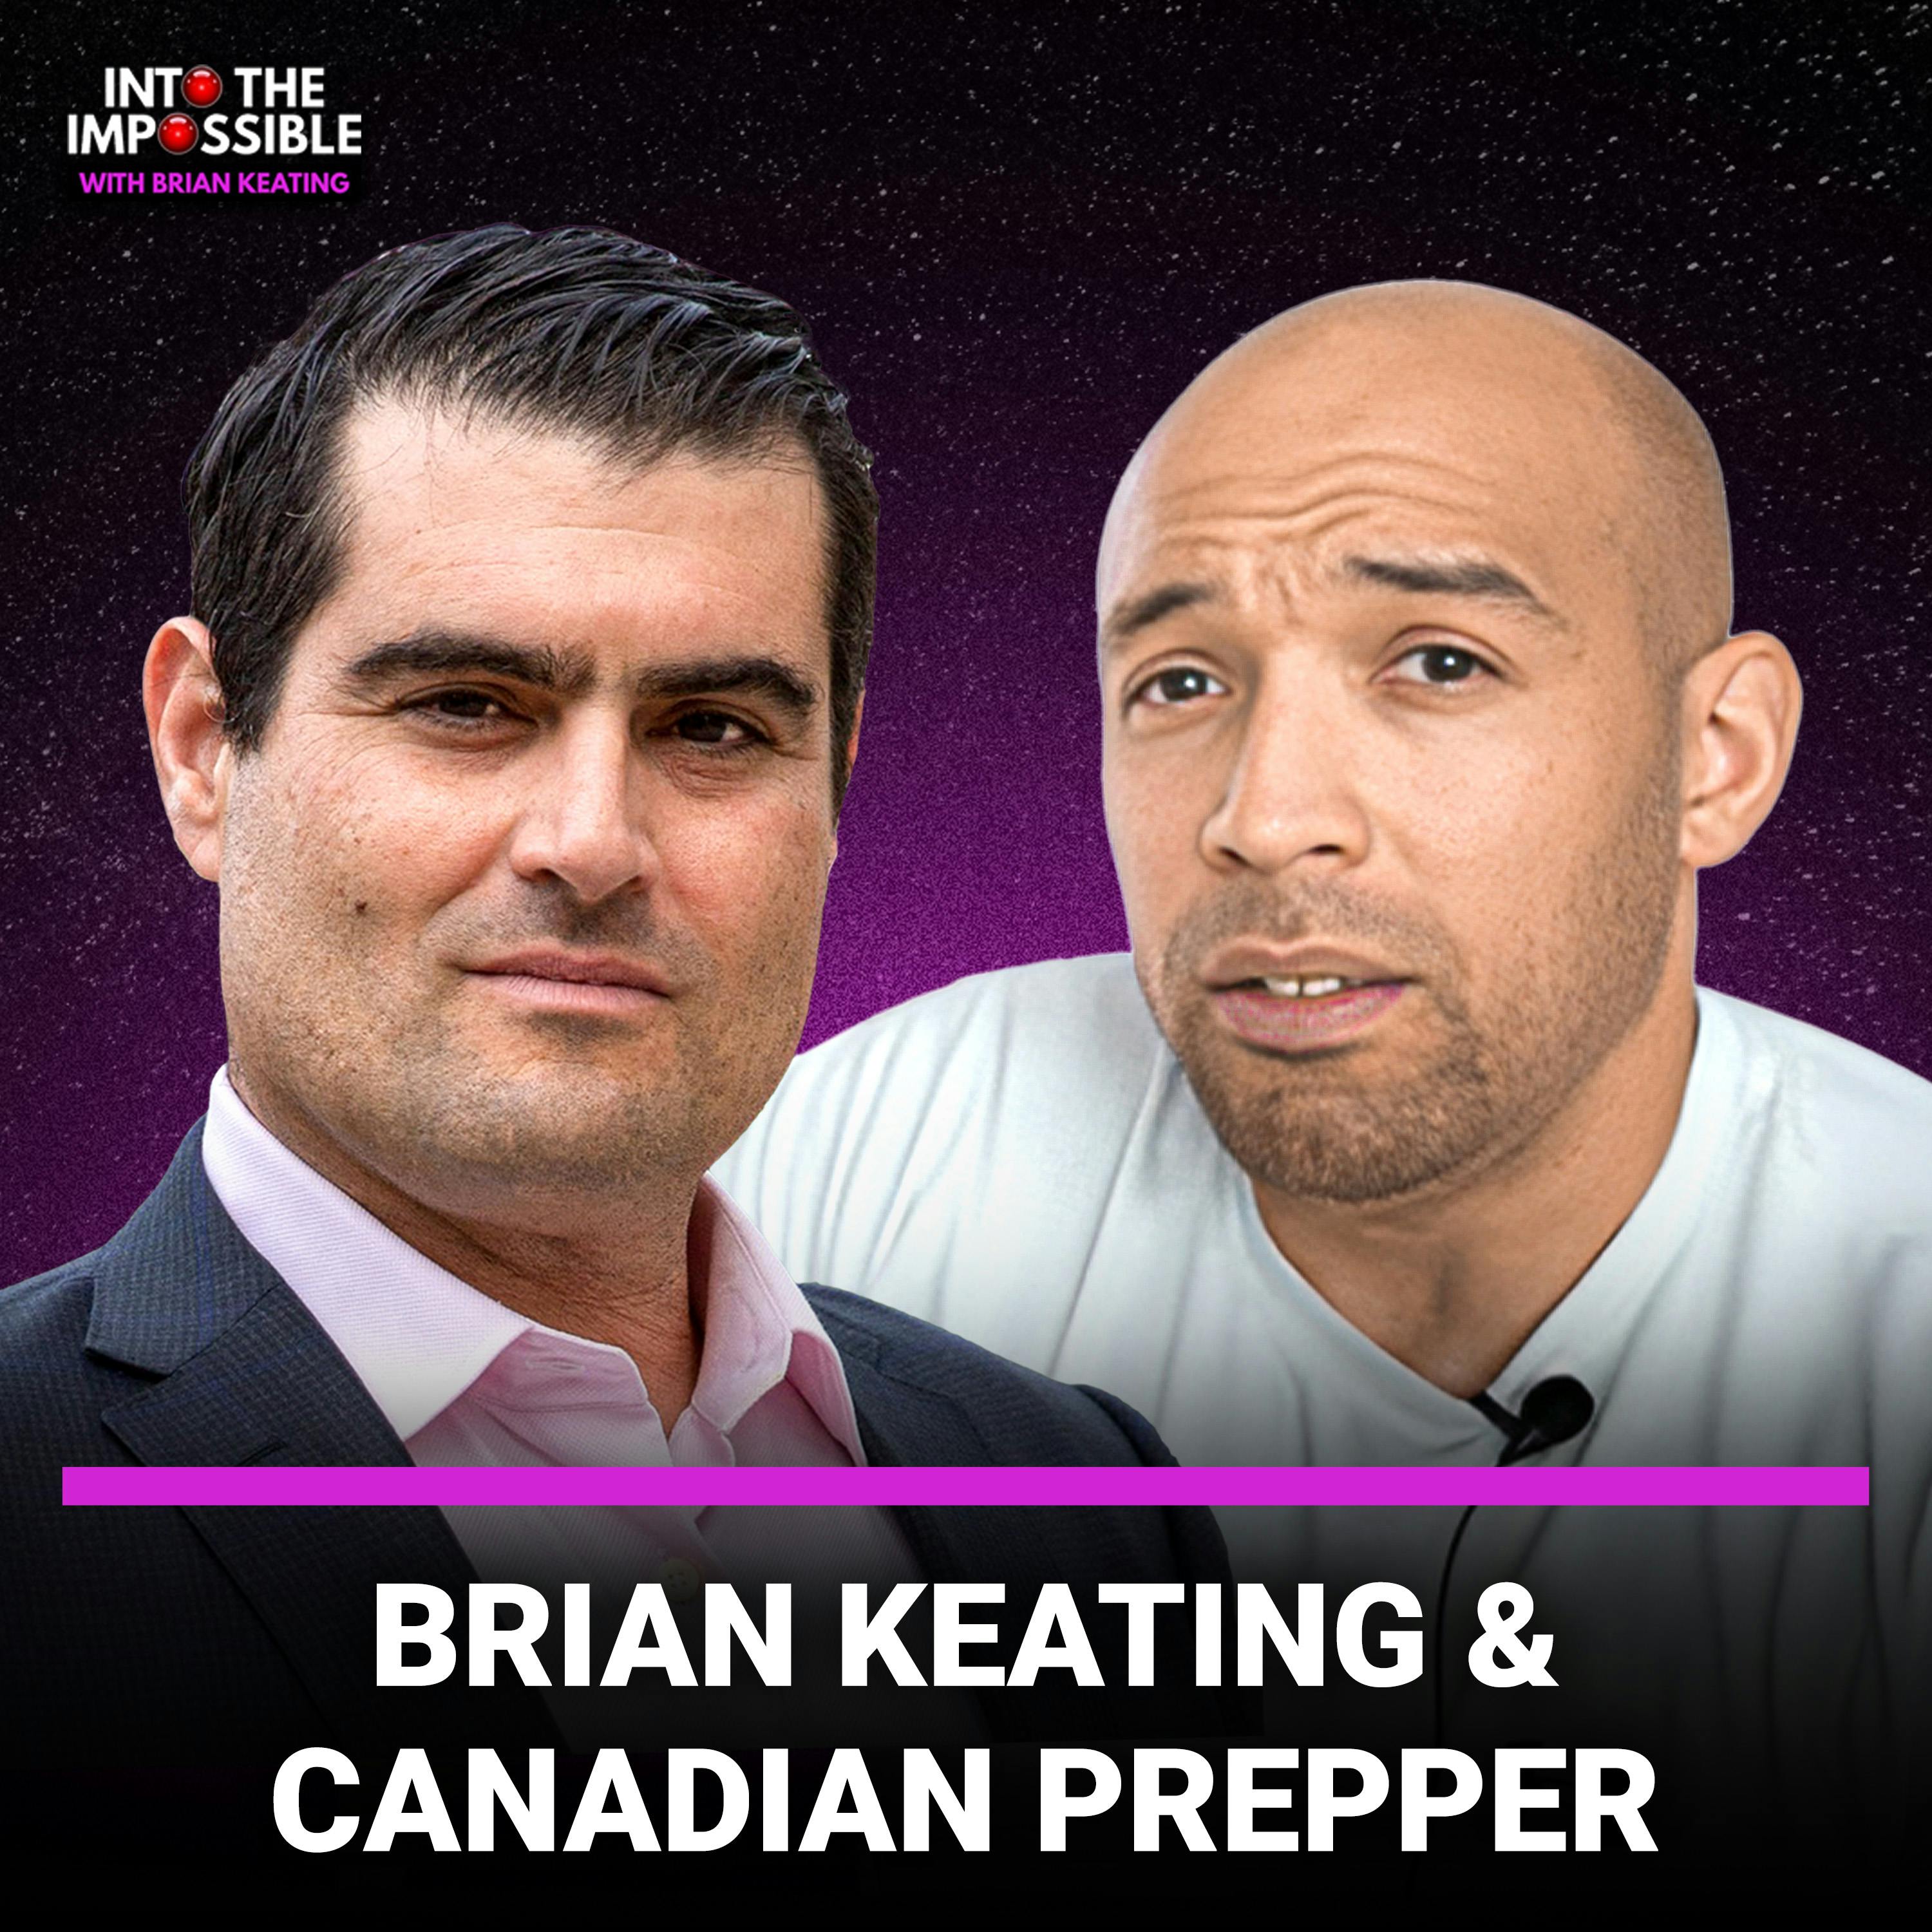 Canadian Prepper & Brian Keating: Will Humans Soon Go EXTINCT? (#372)